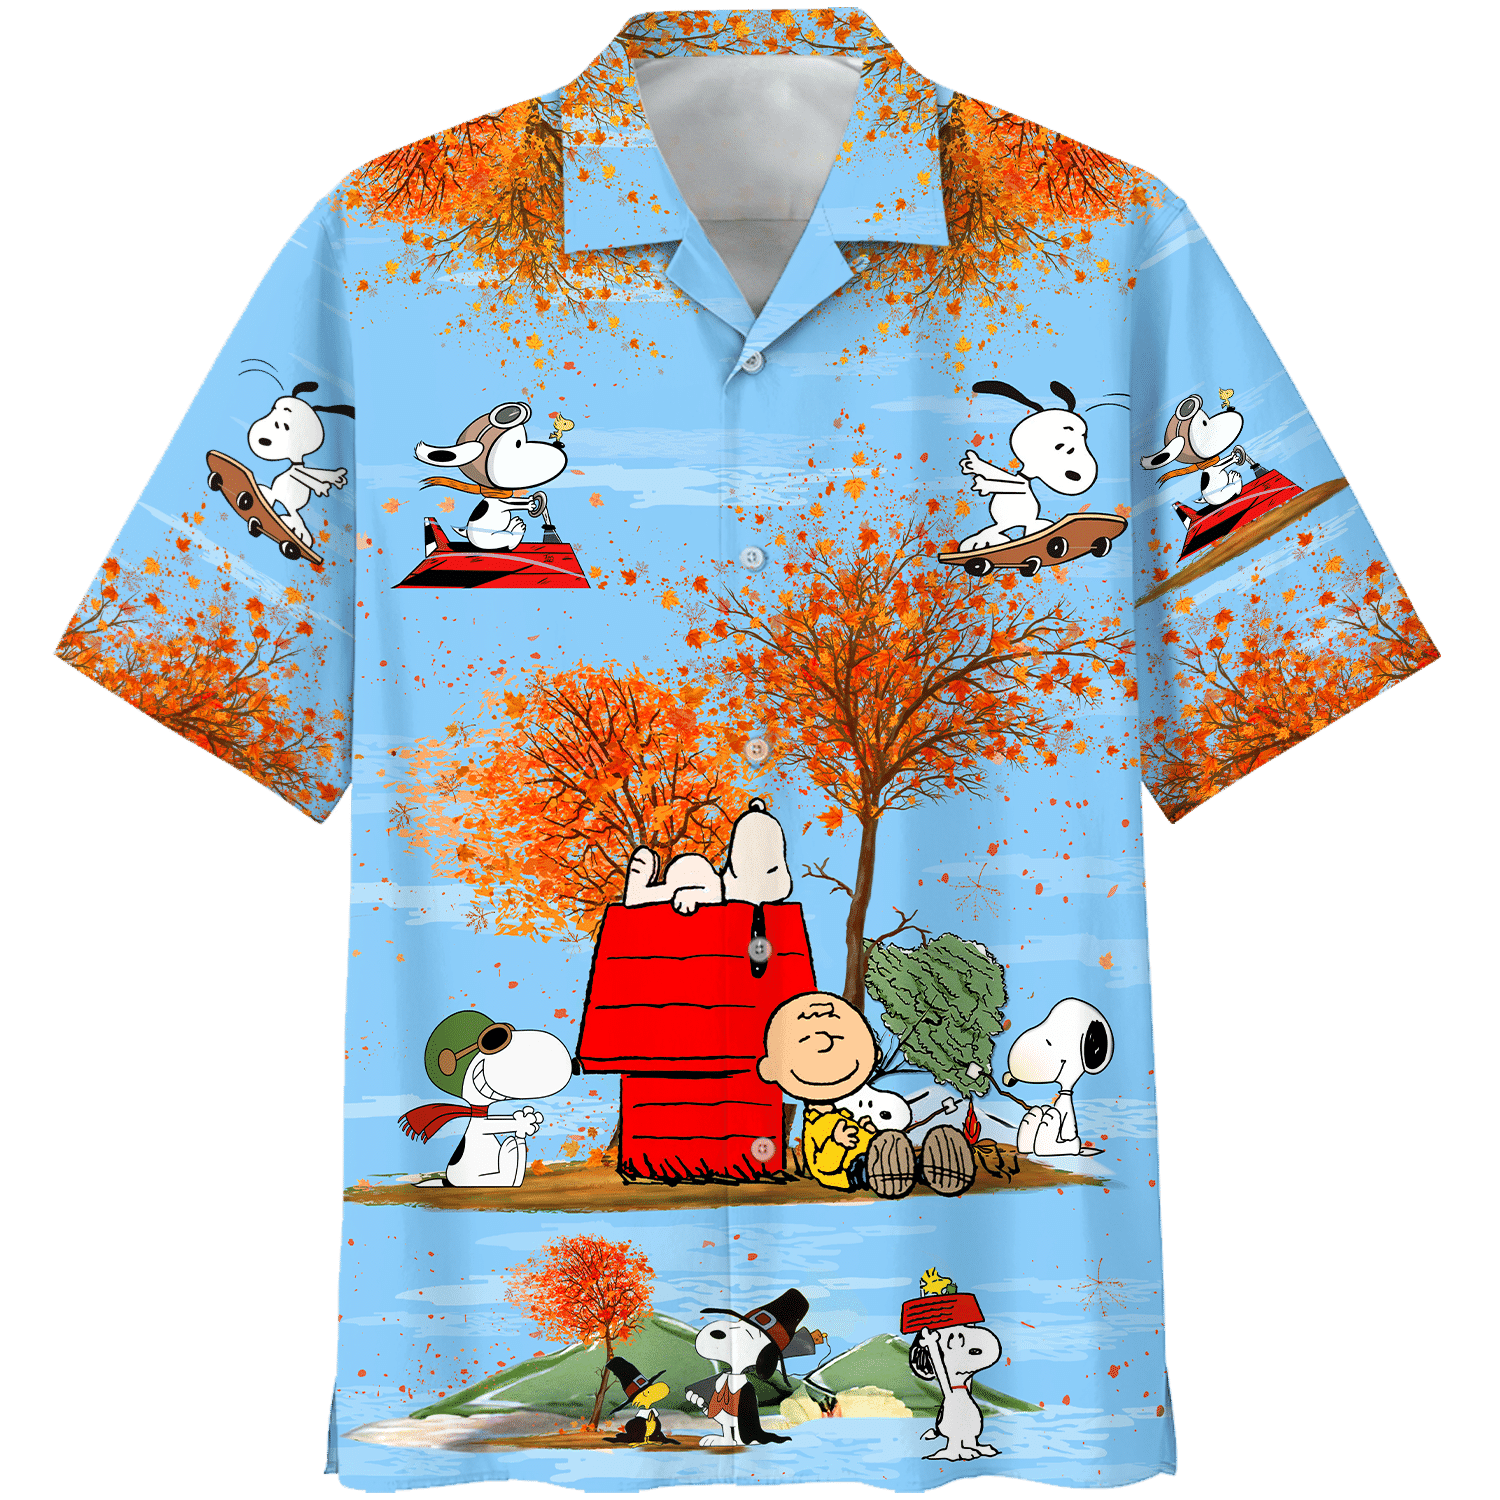 Snoopy and Charlie Brown autumn hawaiian shirt and short 5